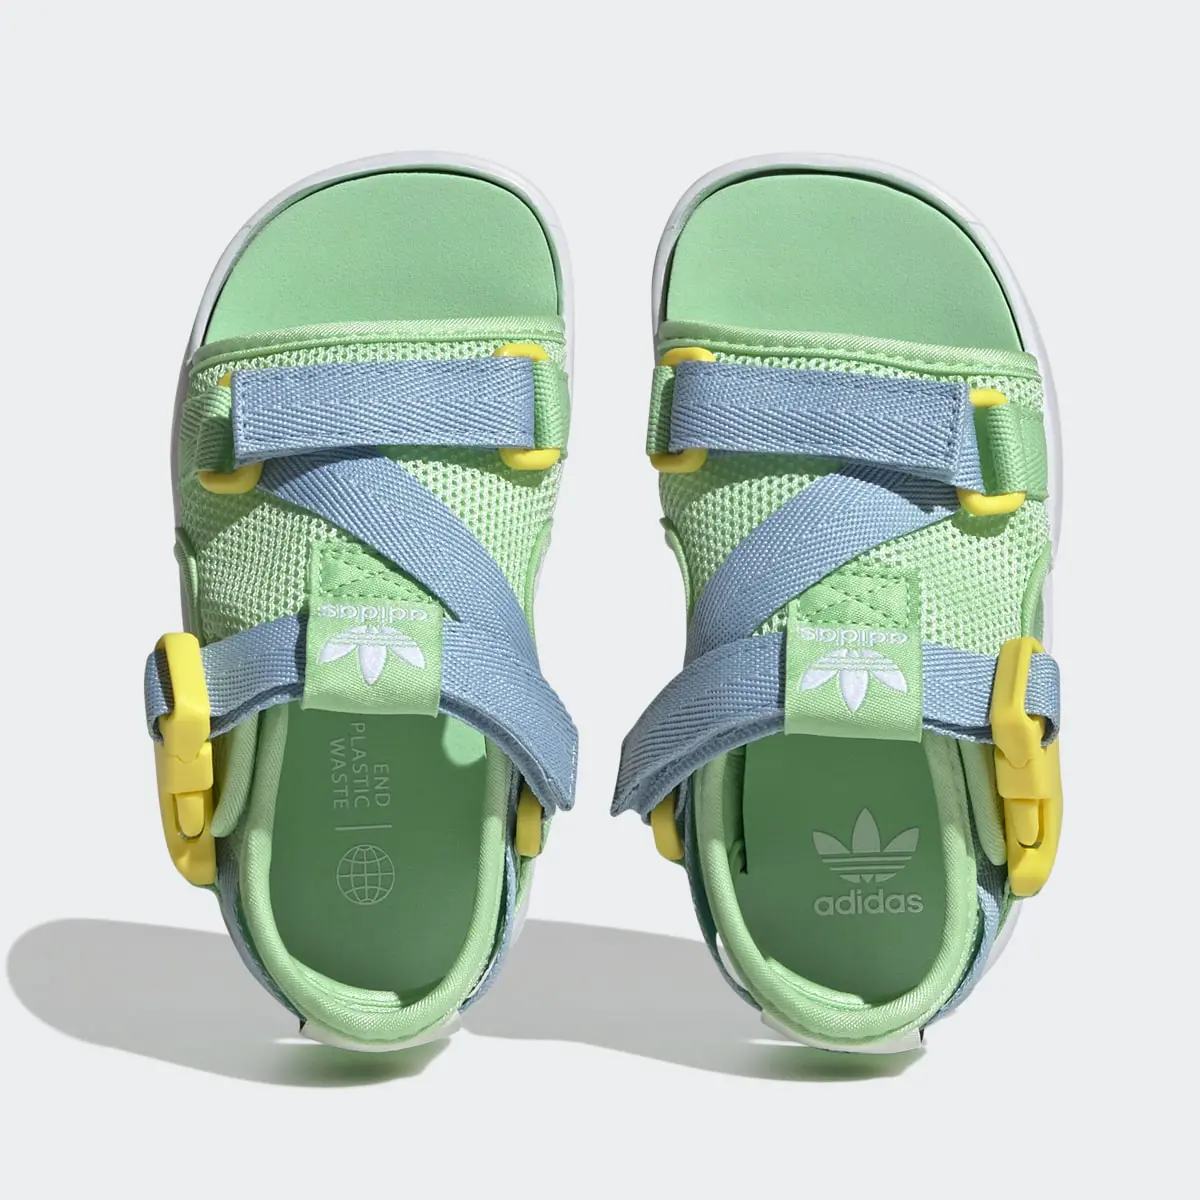 Adidas 360 3.0 Sandals. 3